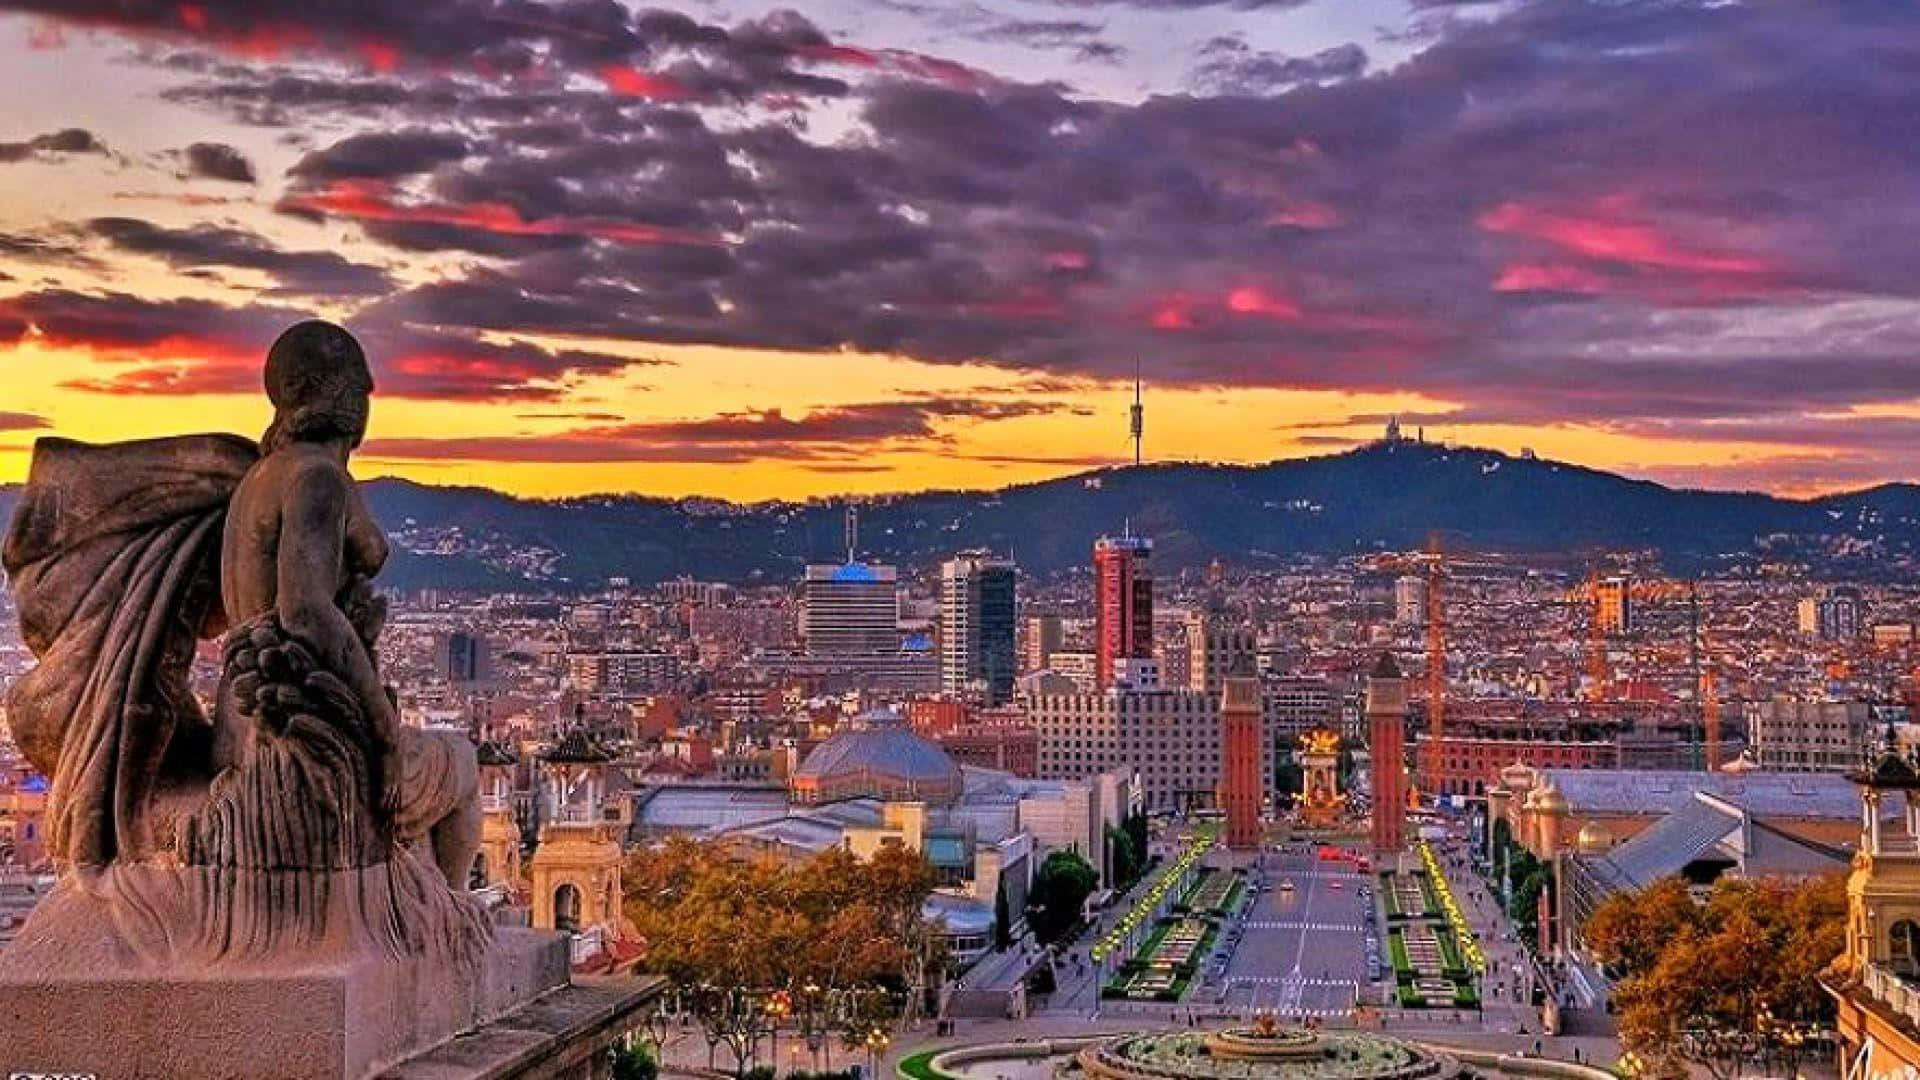 The Picturesque Urban Vista of Barcelona